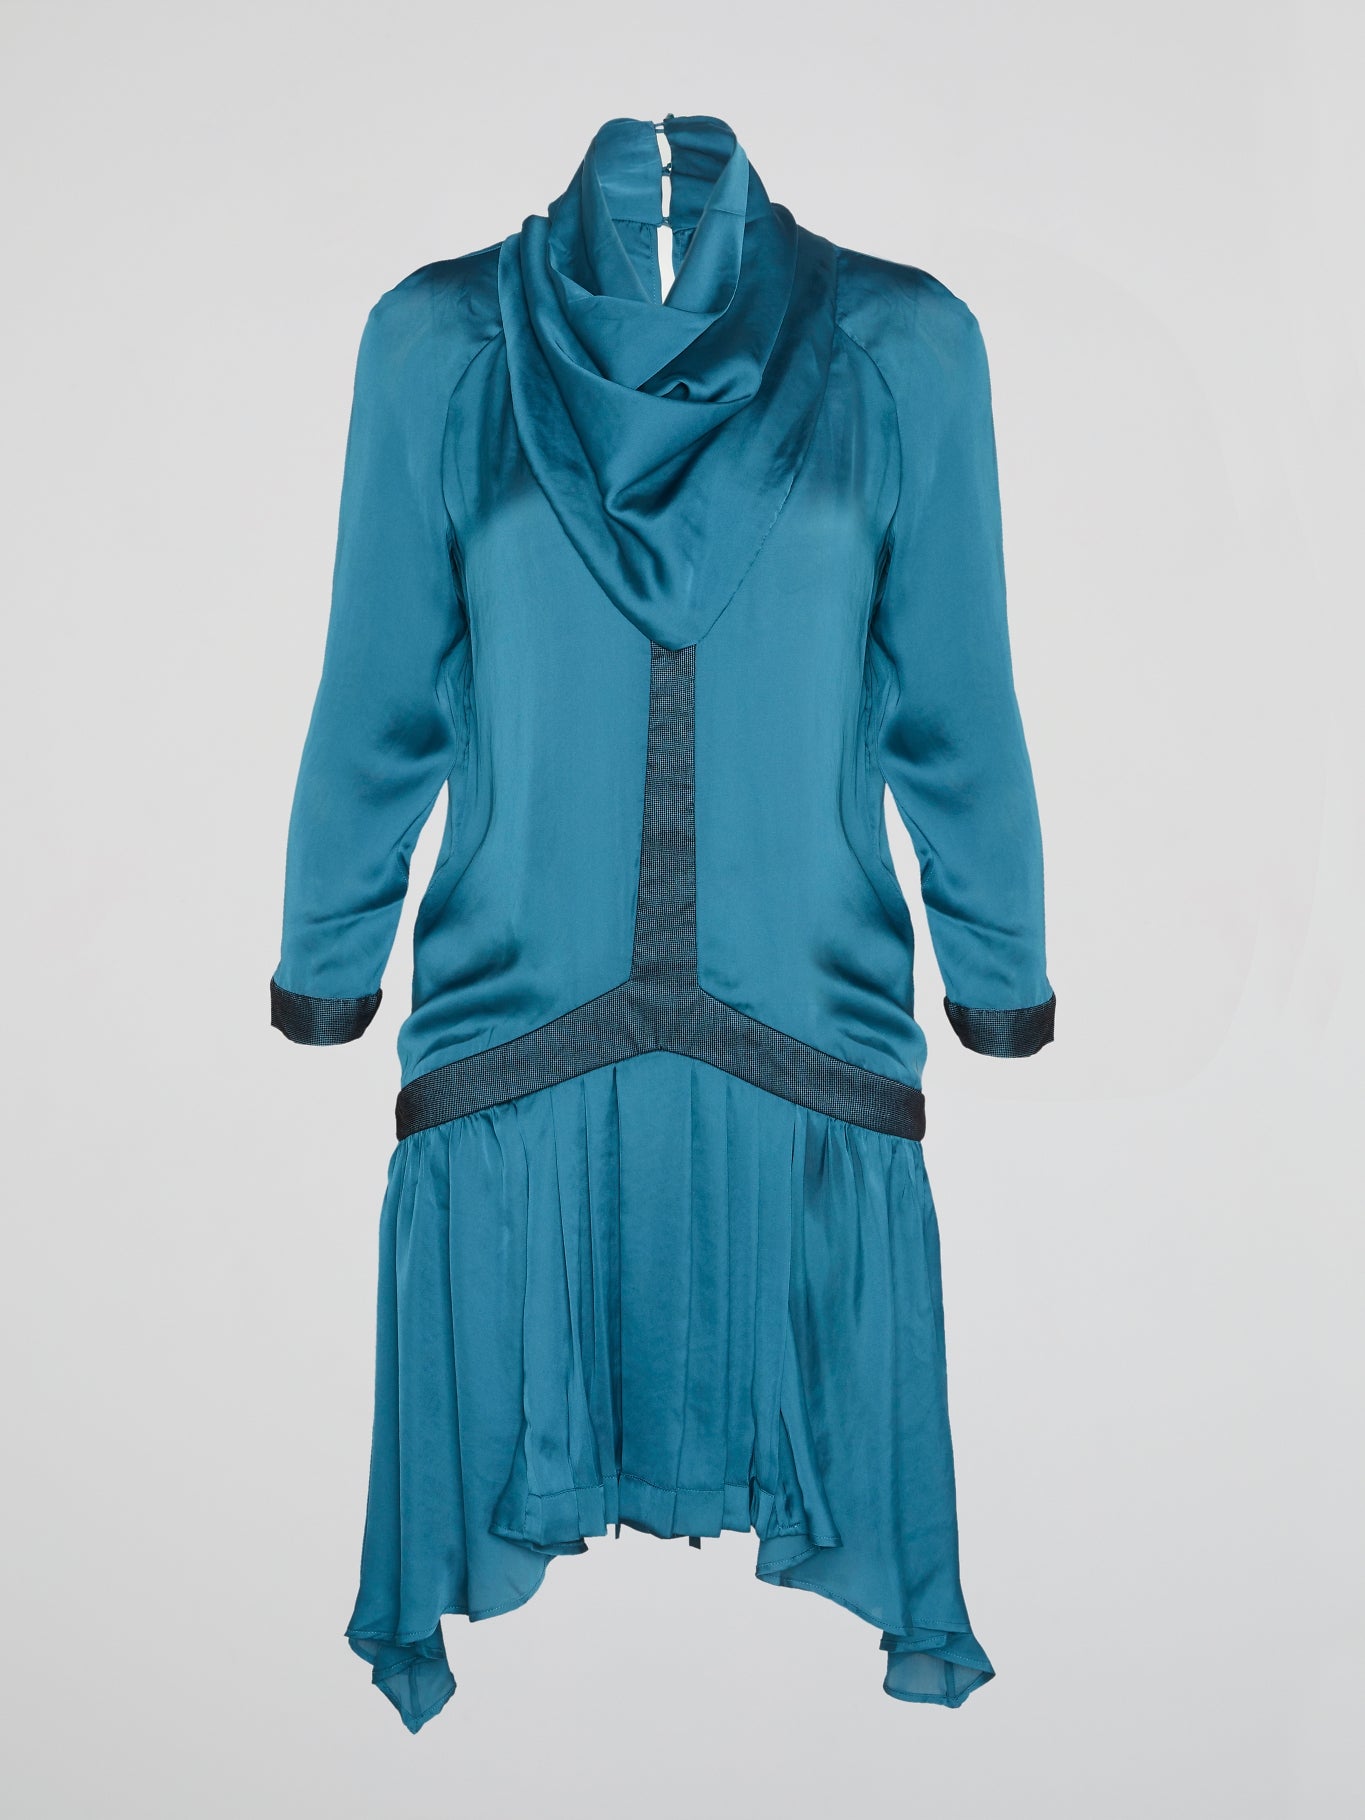 Blue Cowl Neck Frill Dress